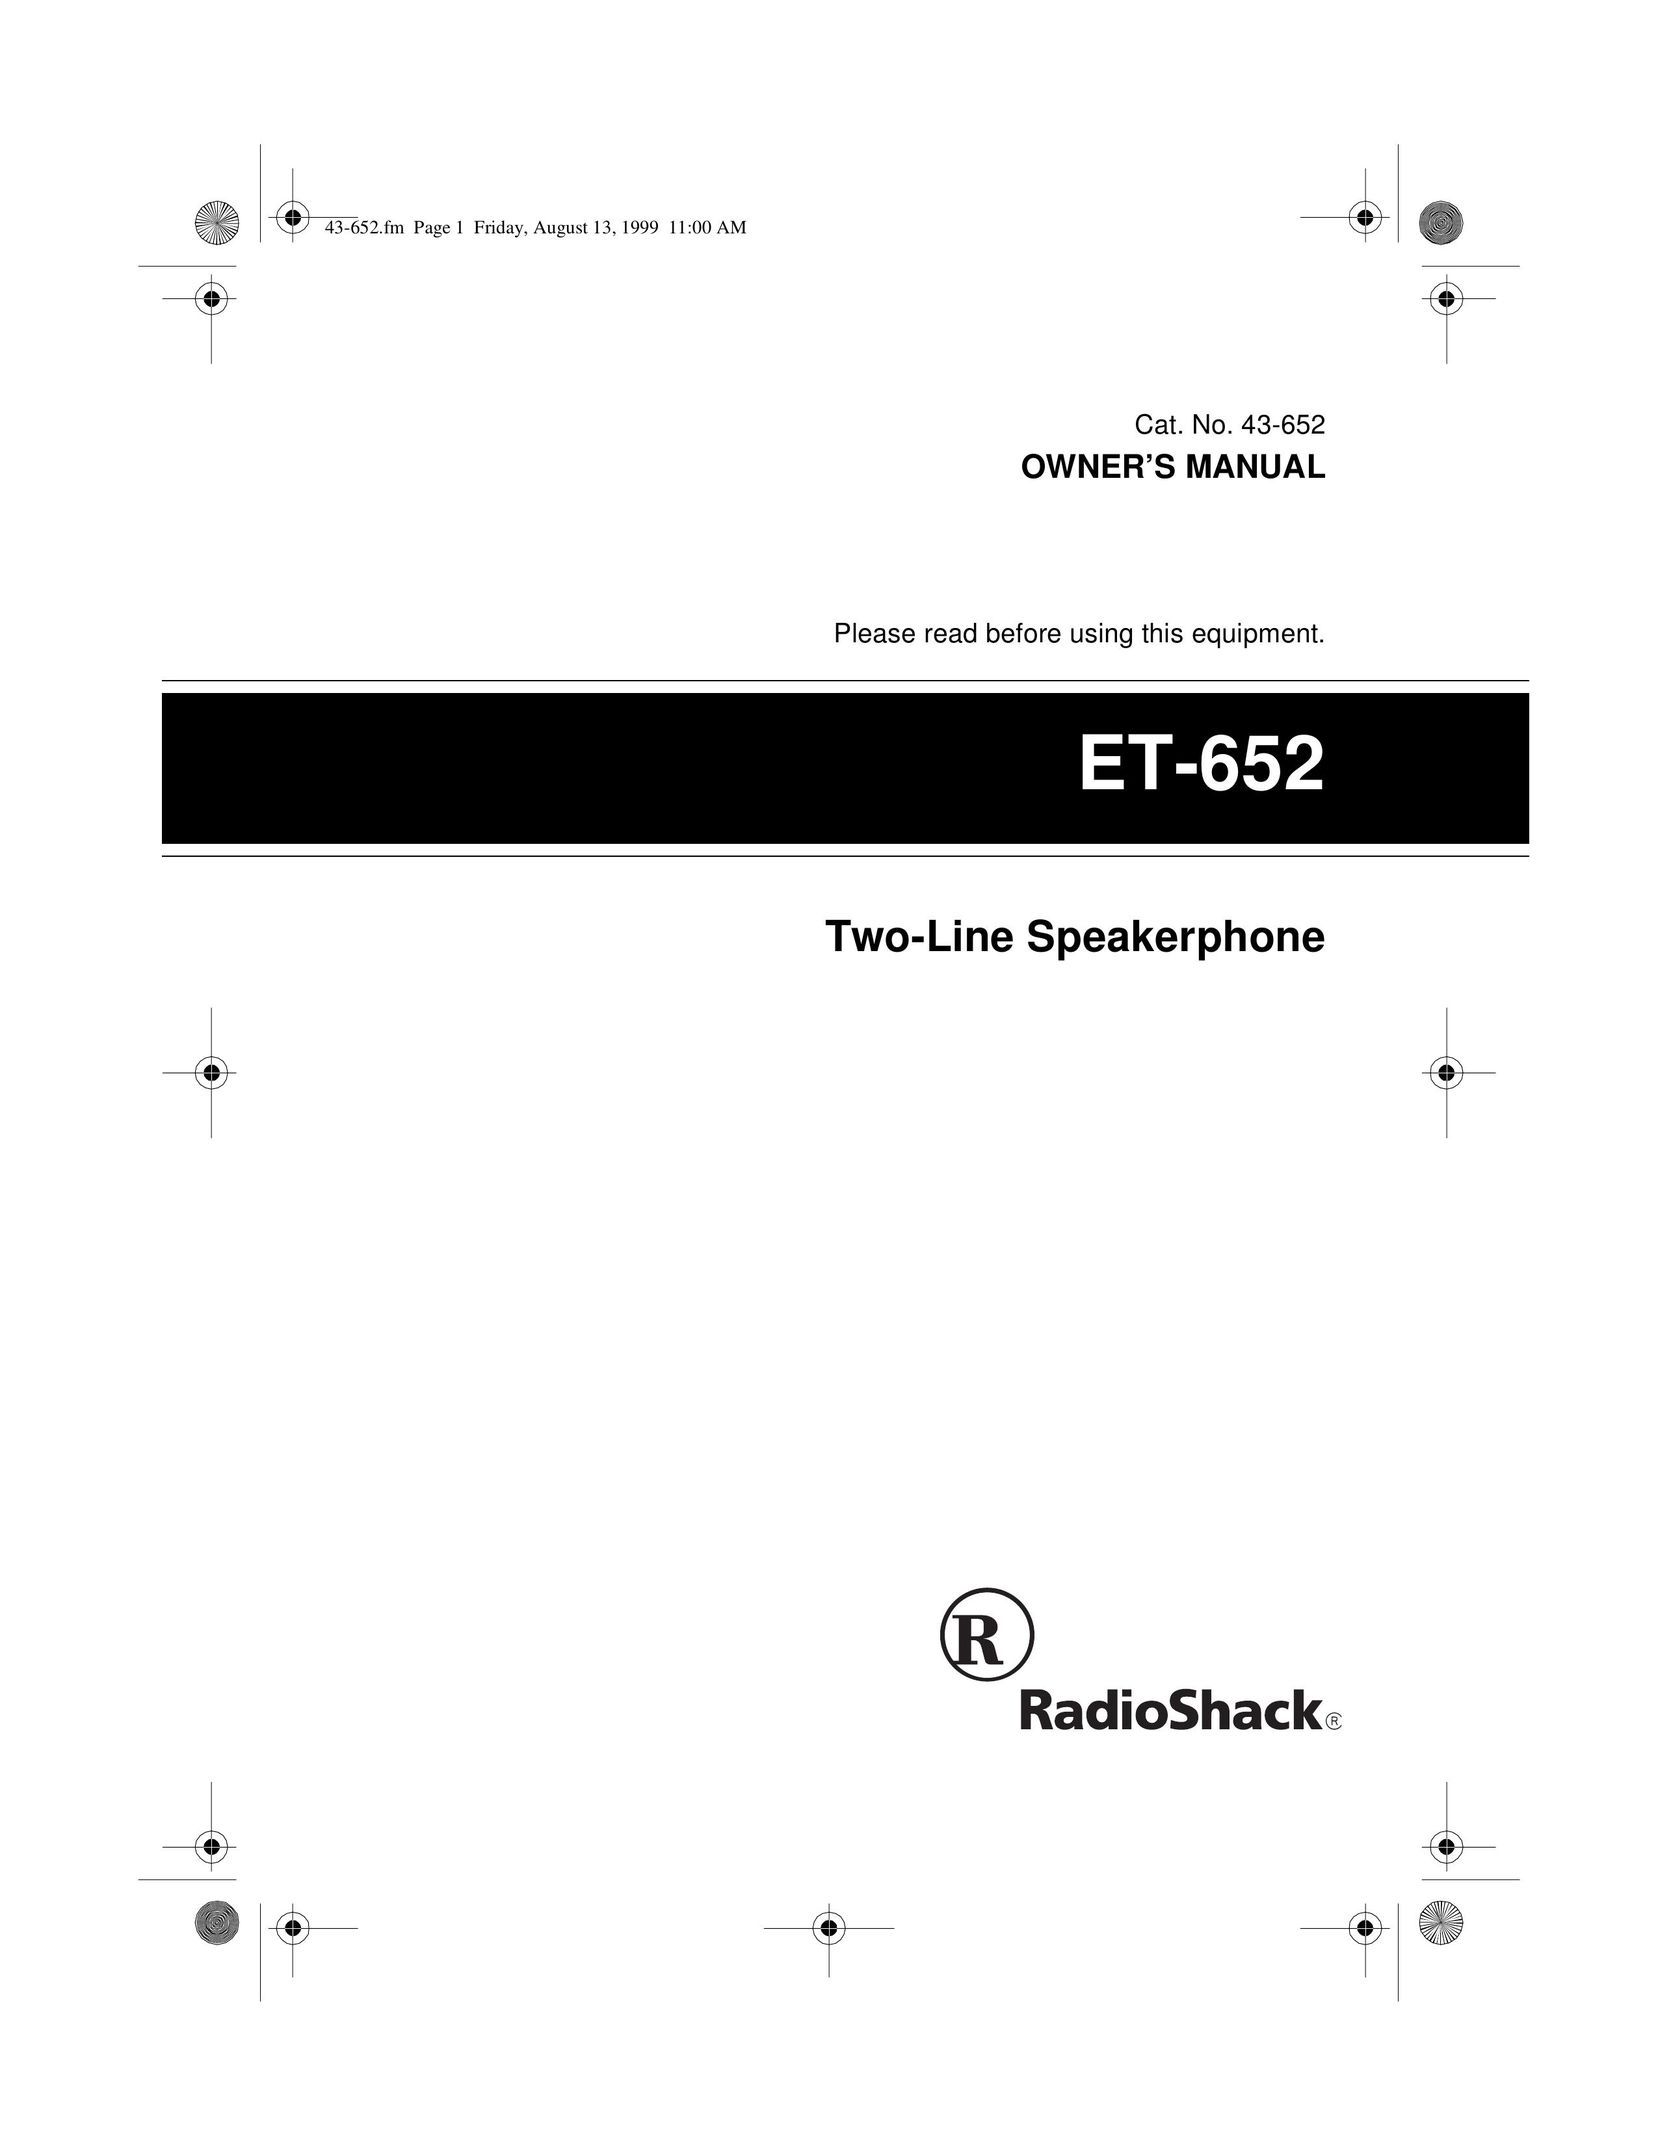 Radio Shack ET-652 Telephone User Manual